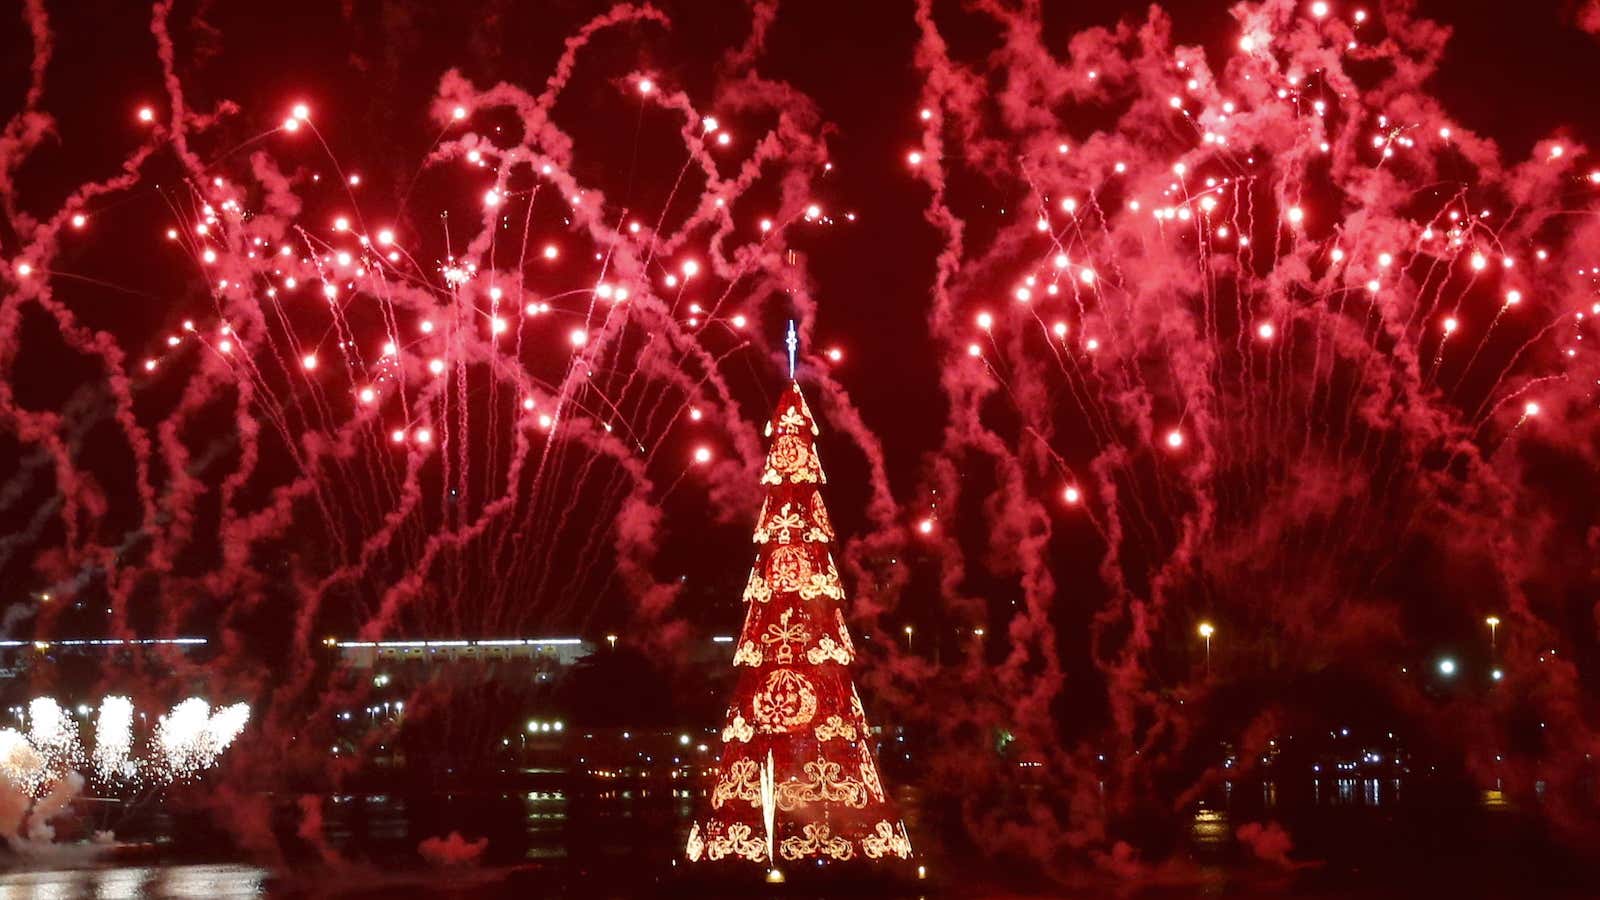 Fireworks explode around Rio’s Christmas tree on Dec. 12.